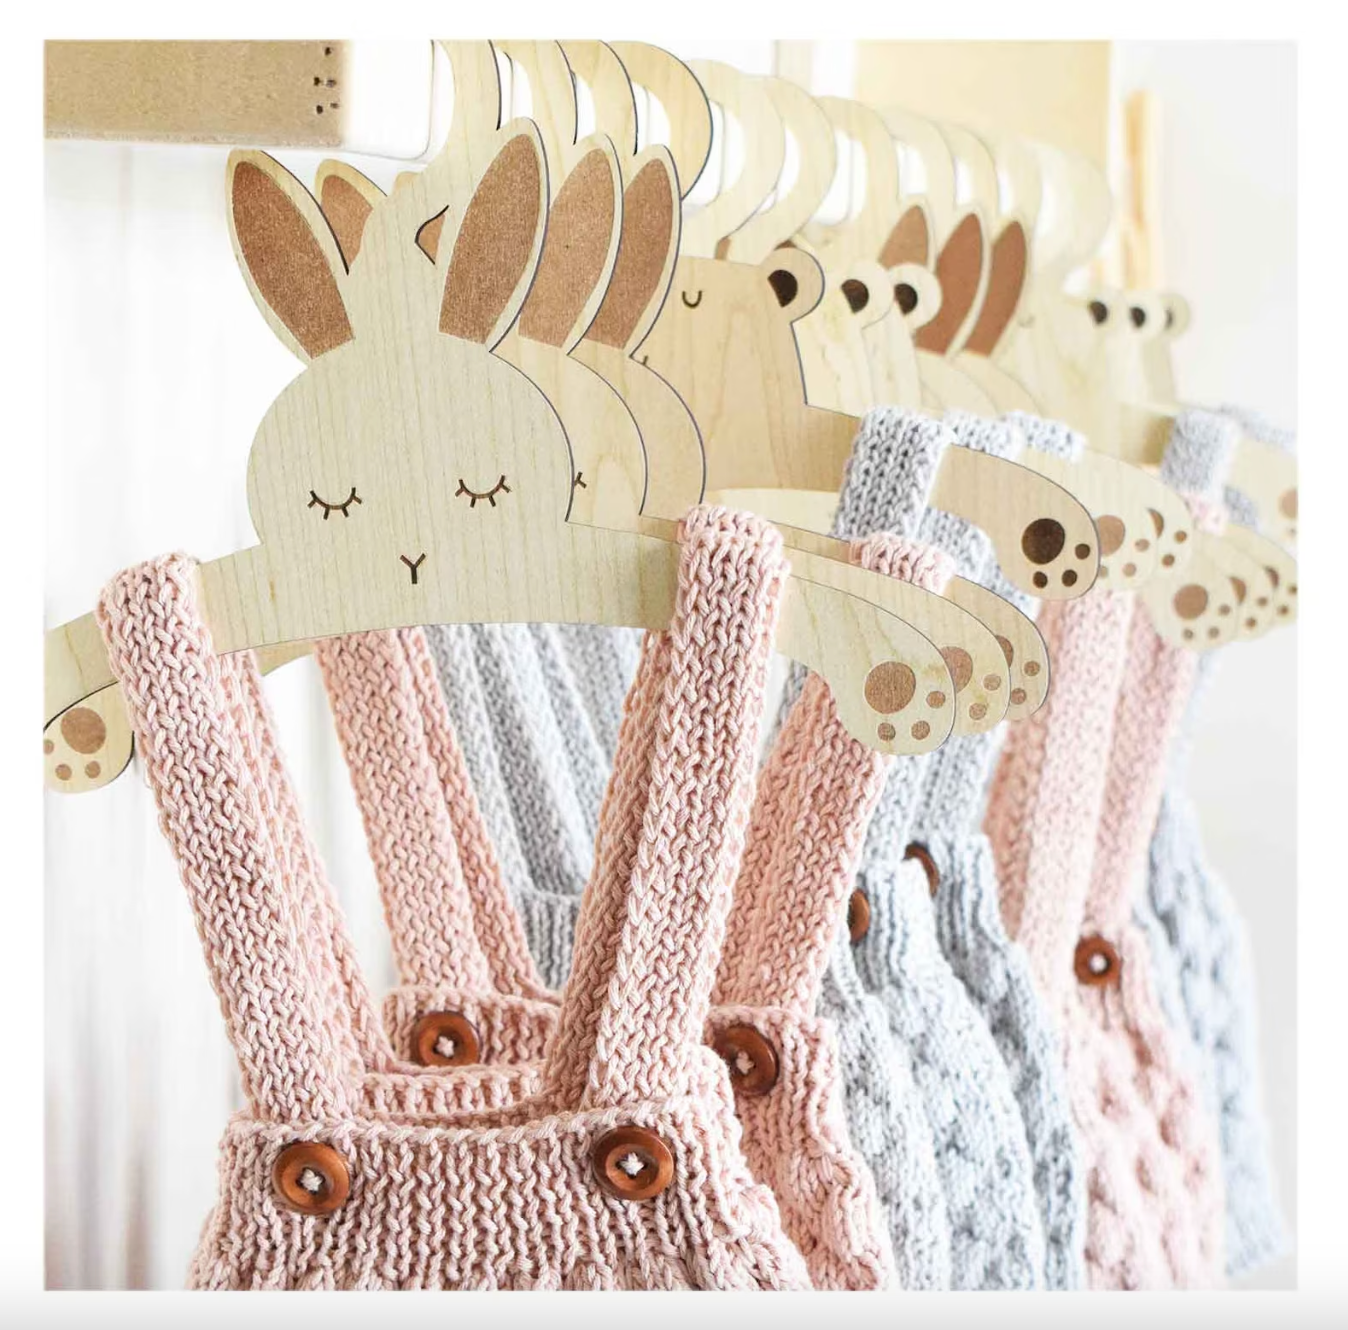 EnjoyMyDesign - Wooden Animal Baby Hangers, Wooden Baby Closet Hangers - Bear / 35 Pcs